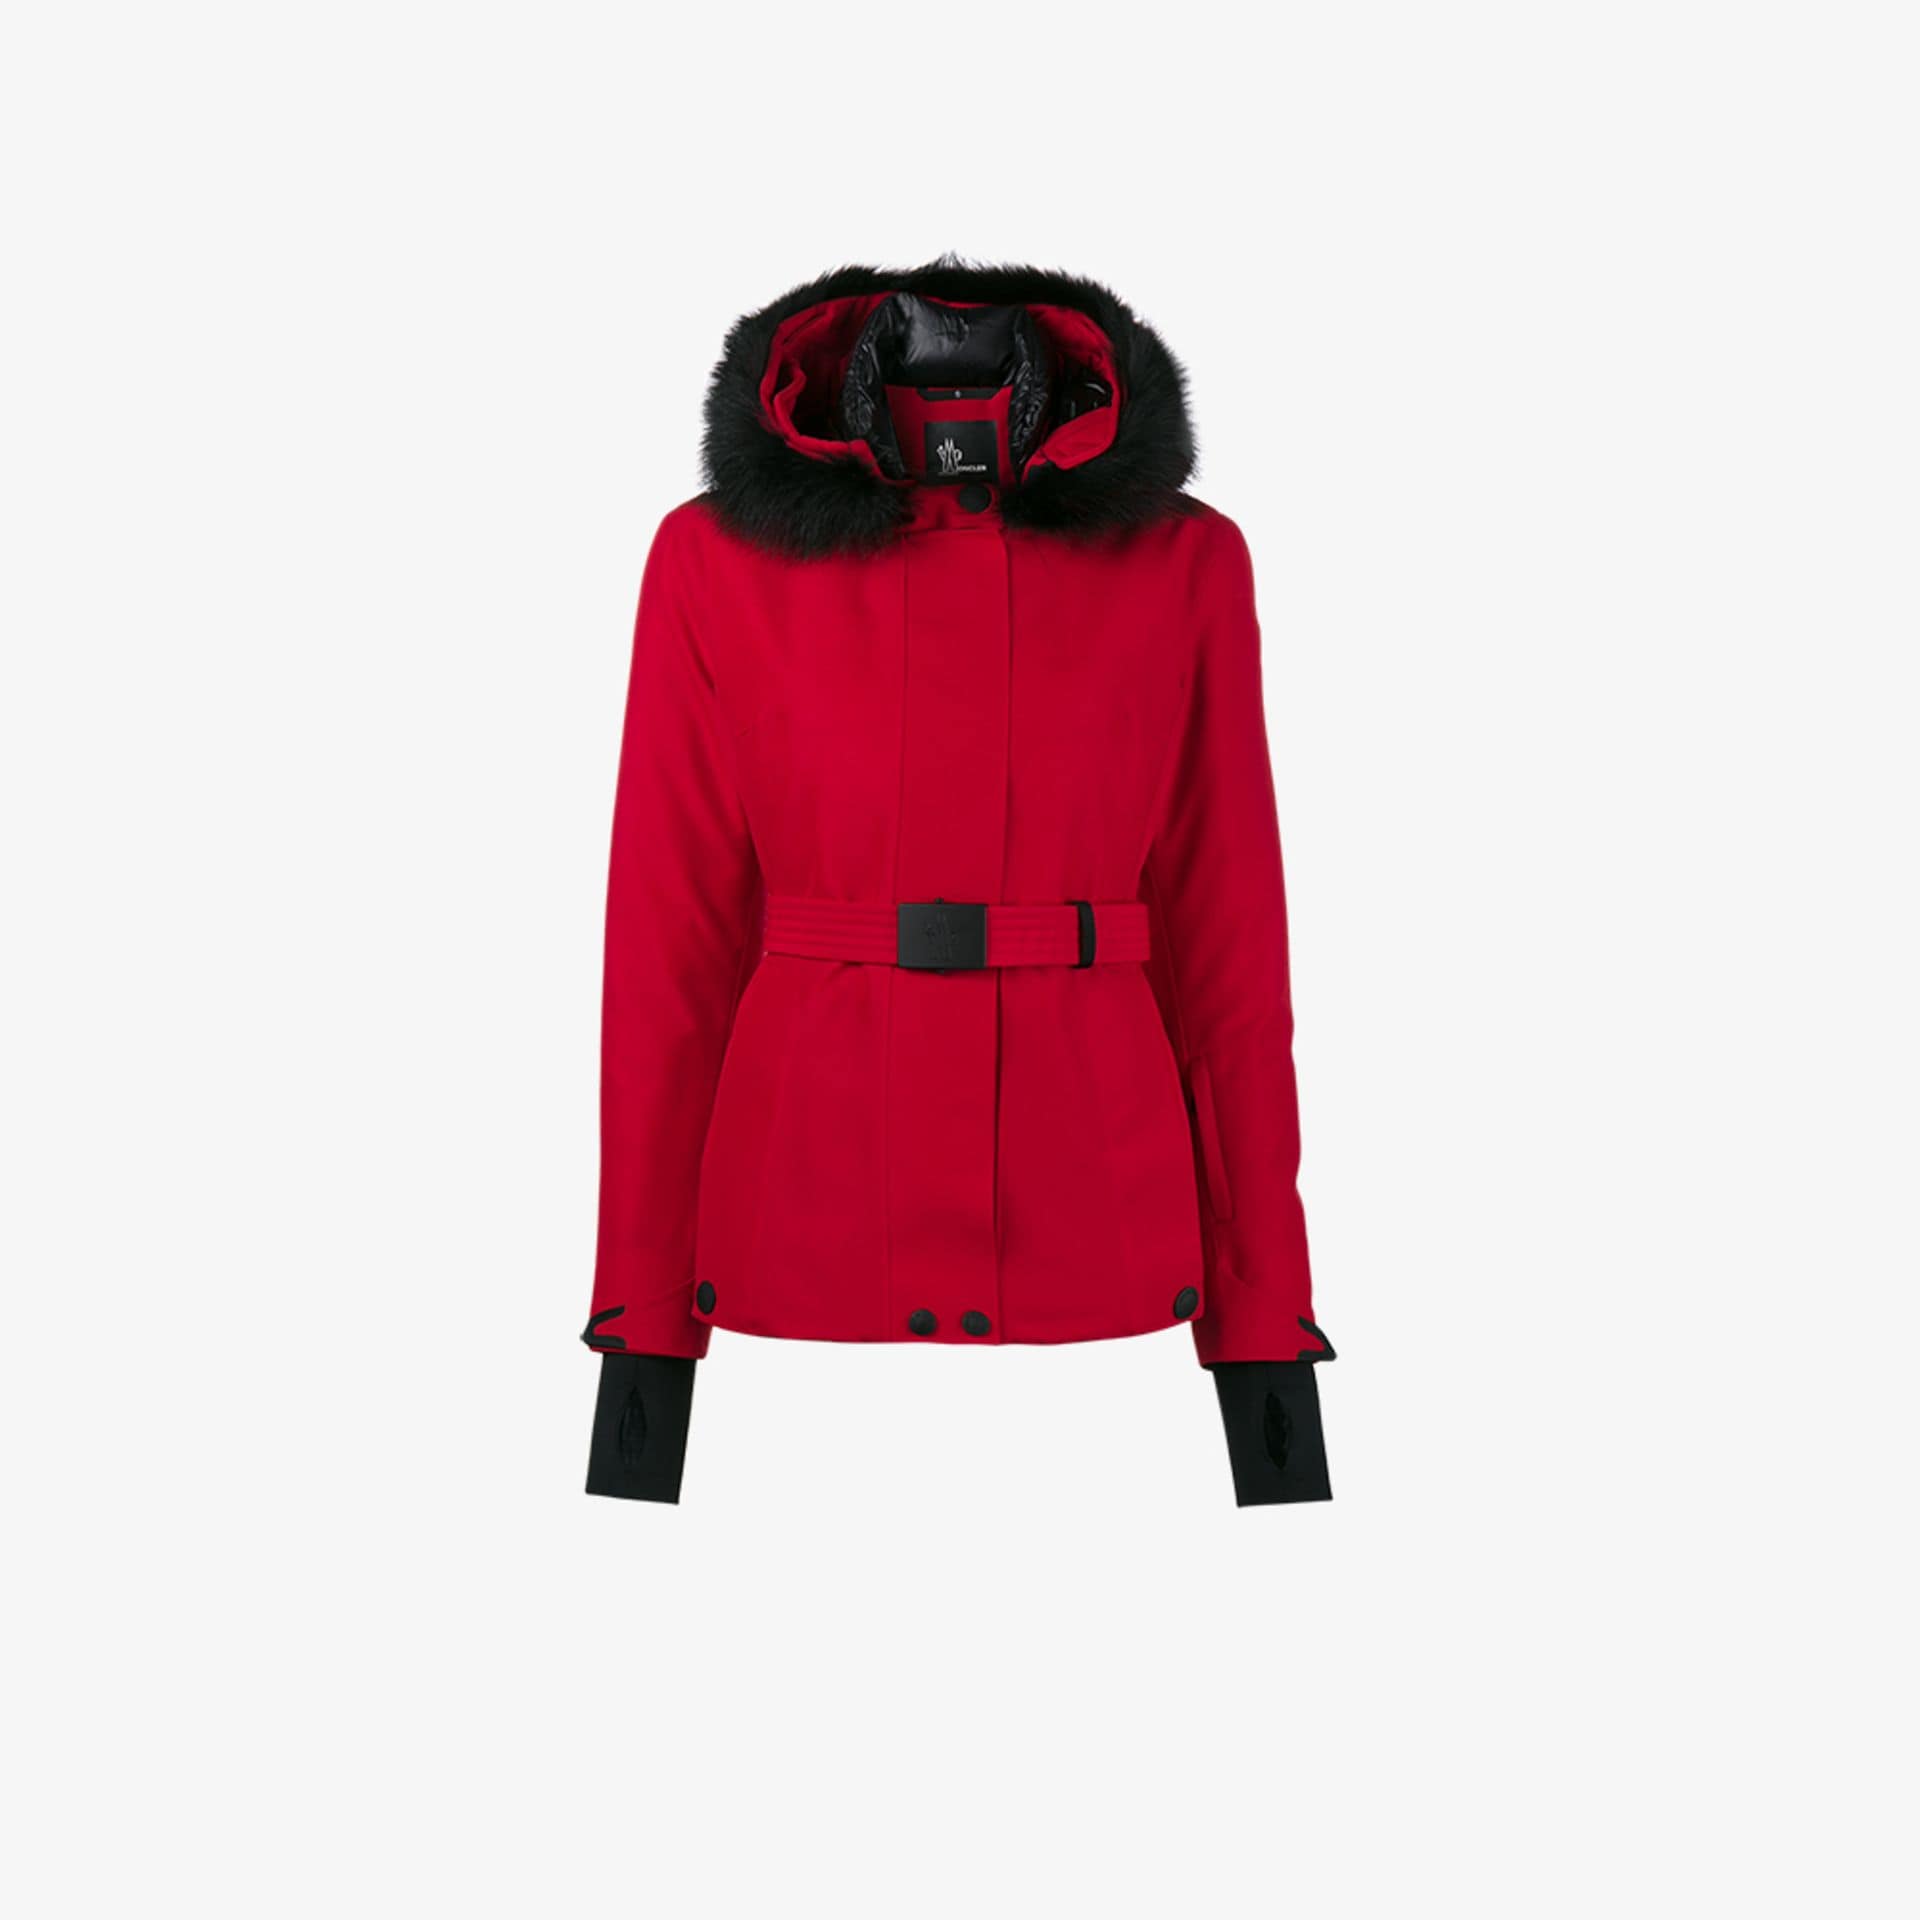 moncler red ski jacket